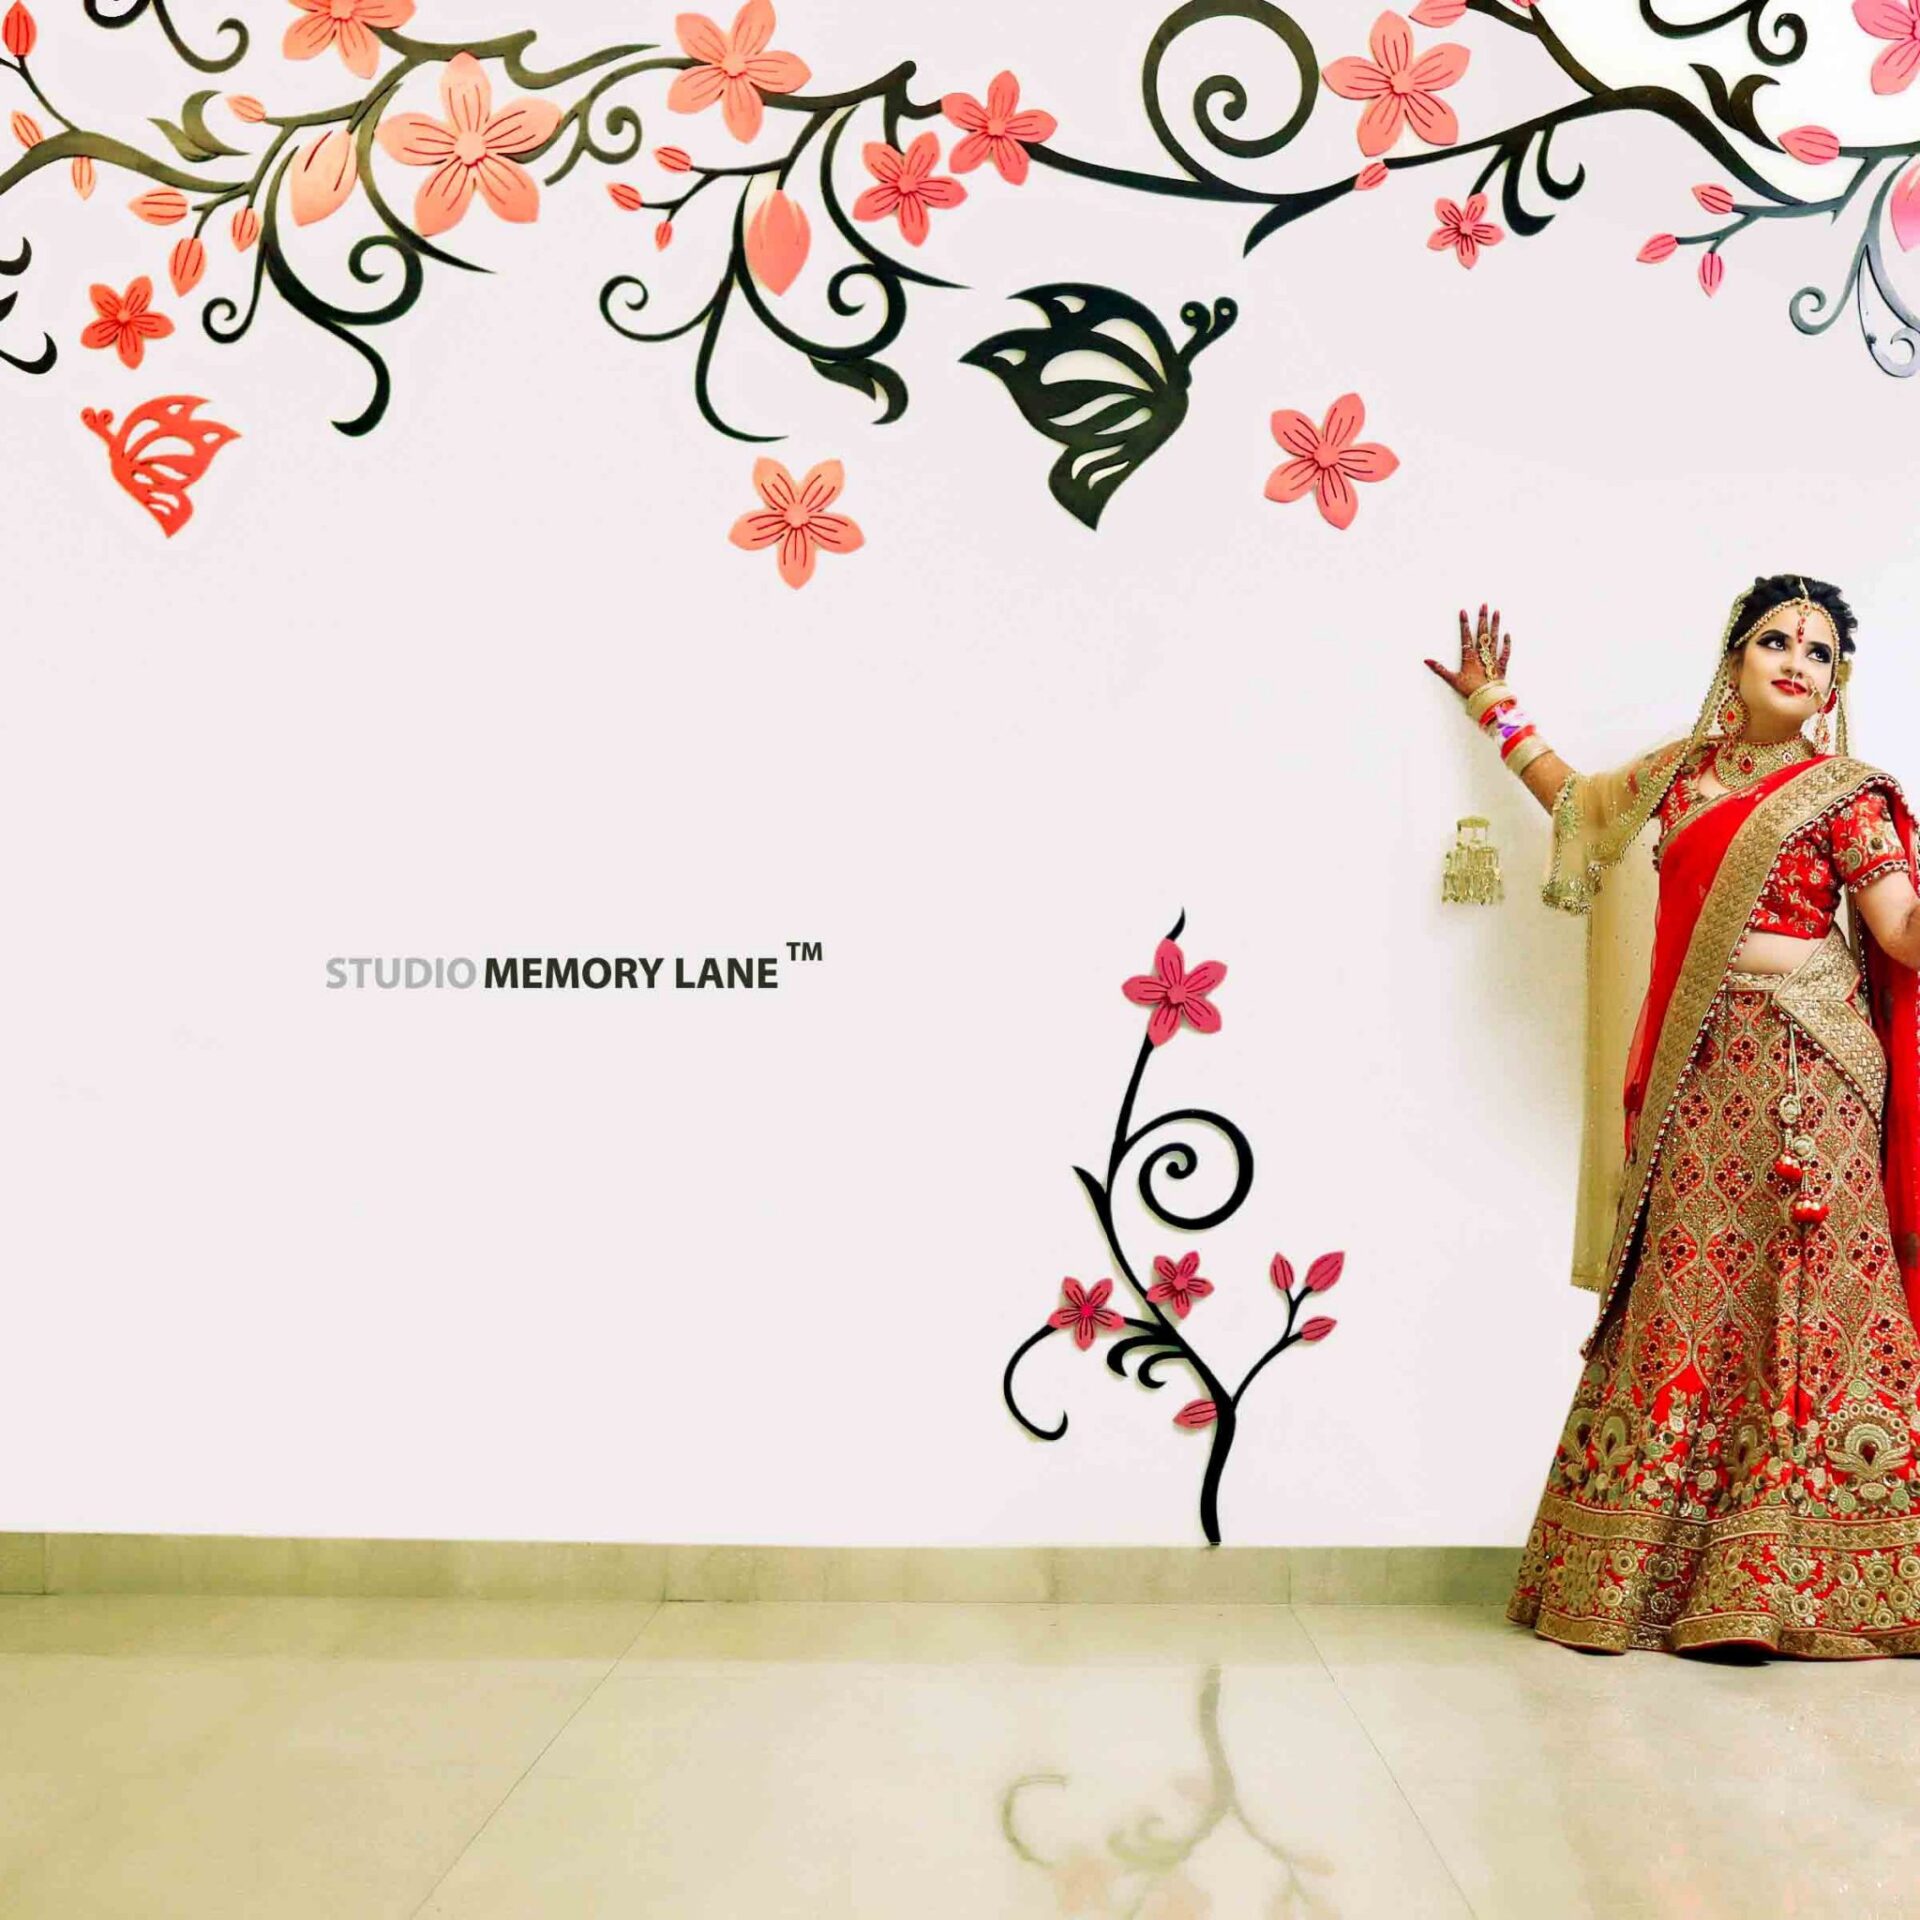 Top wedding photographer Chandigarh | Lovely Bride!